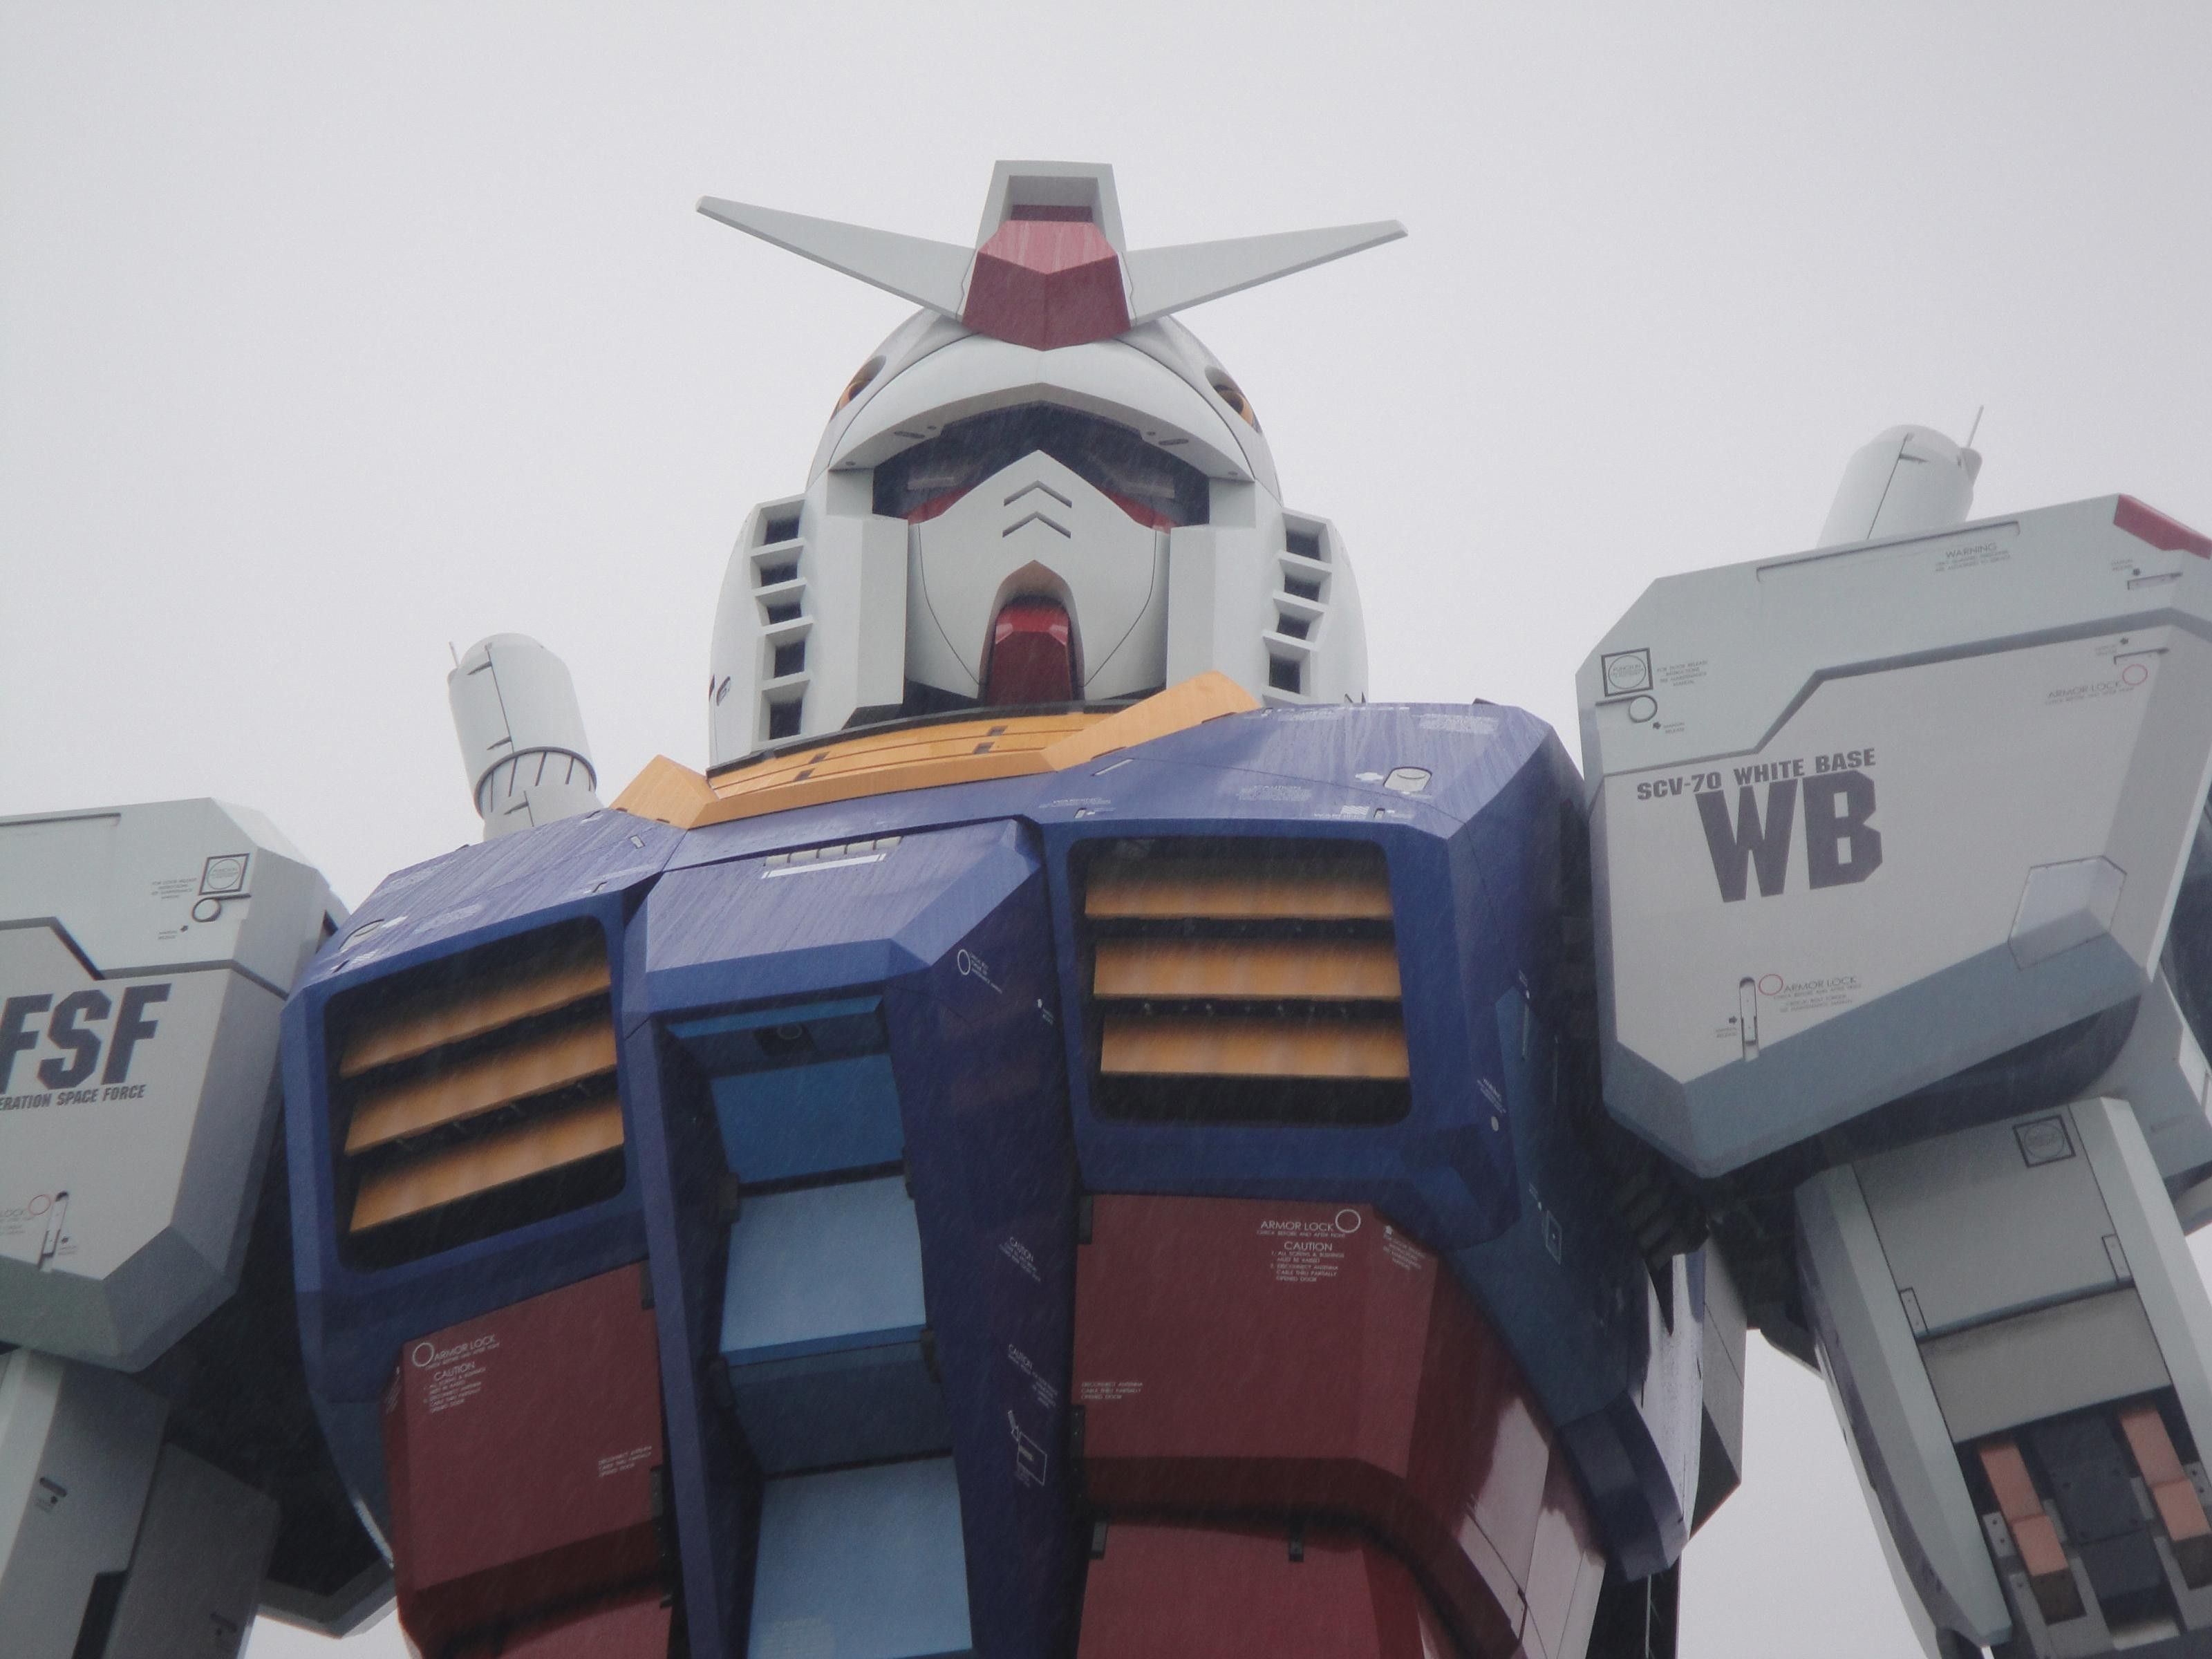 Gundam, Japan, Mobile Suit Gundam, RX .wallup.net